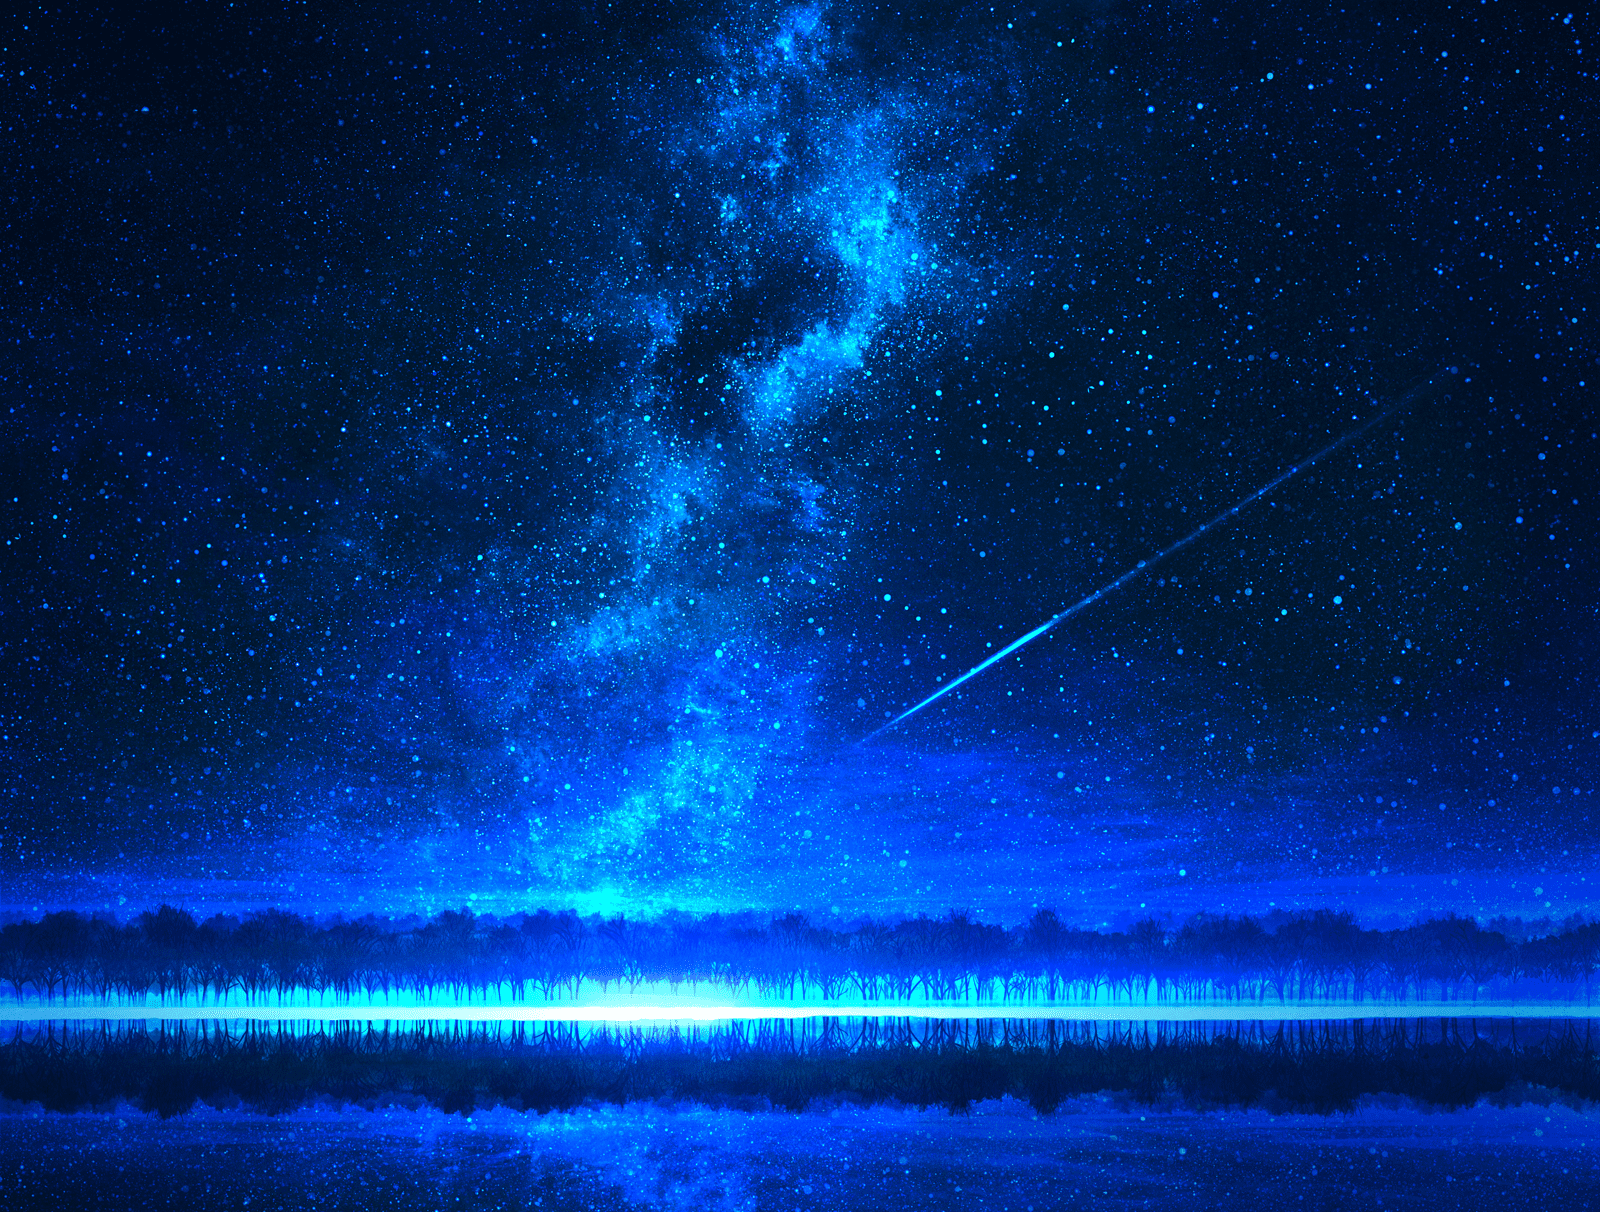 General 1600x1212 digital art artwork nature landscape sky stars night